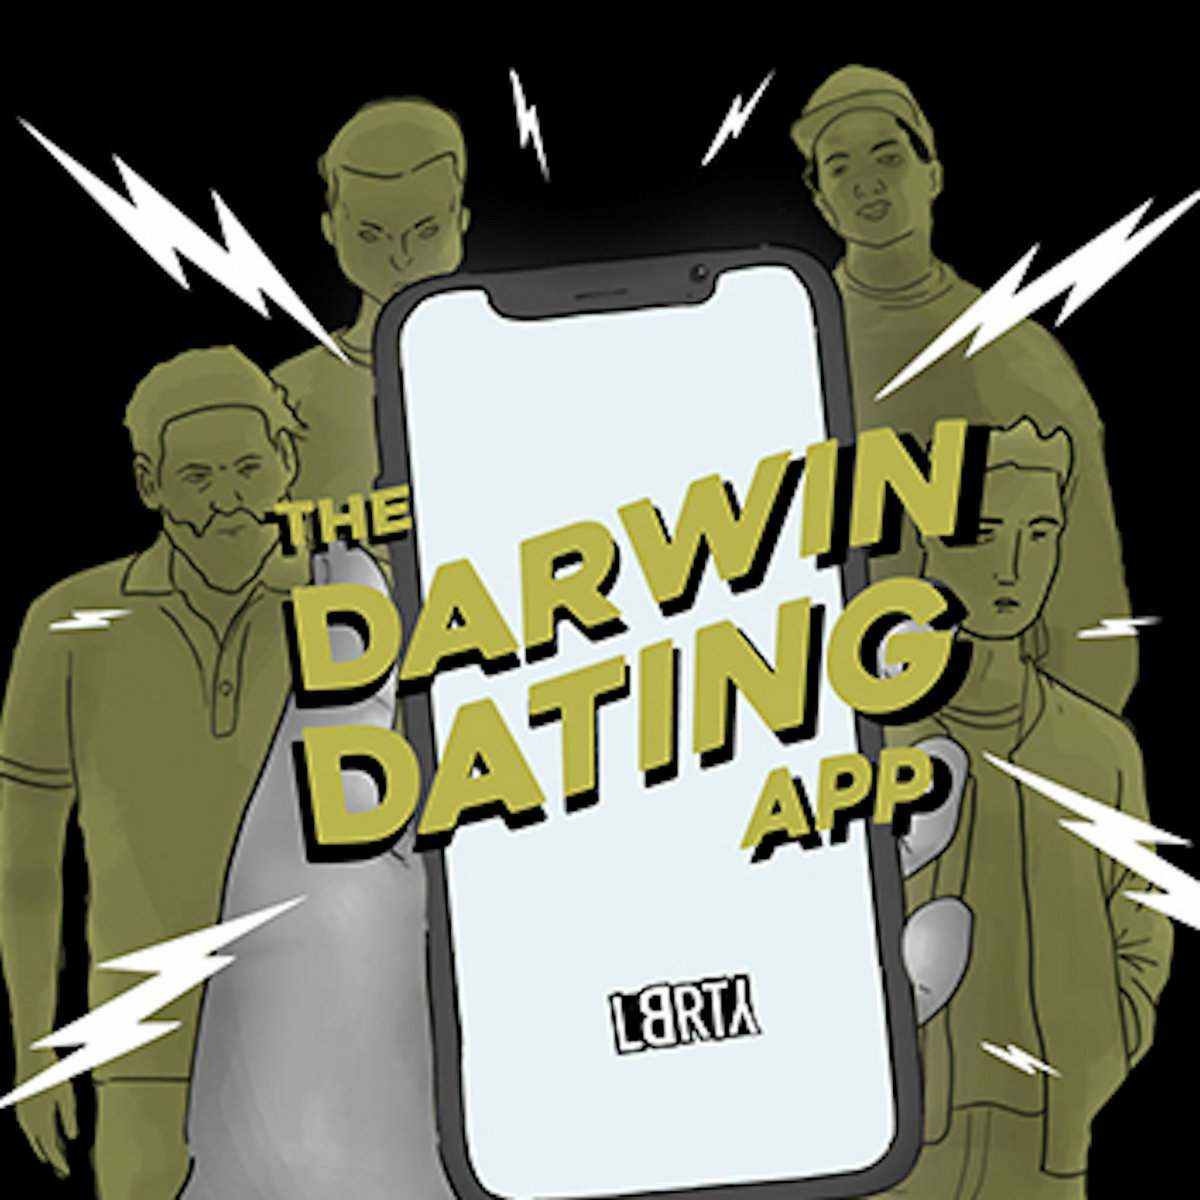 The Darwin dating app